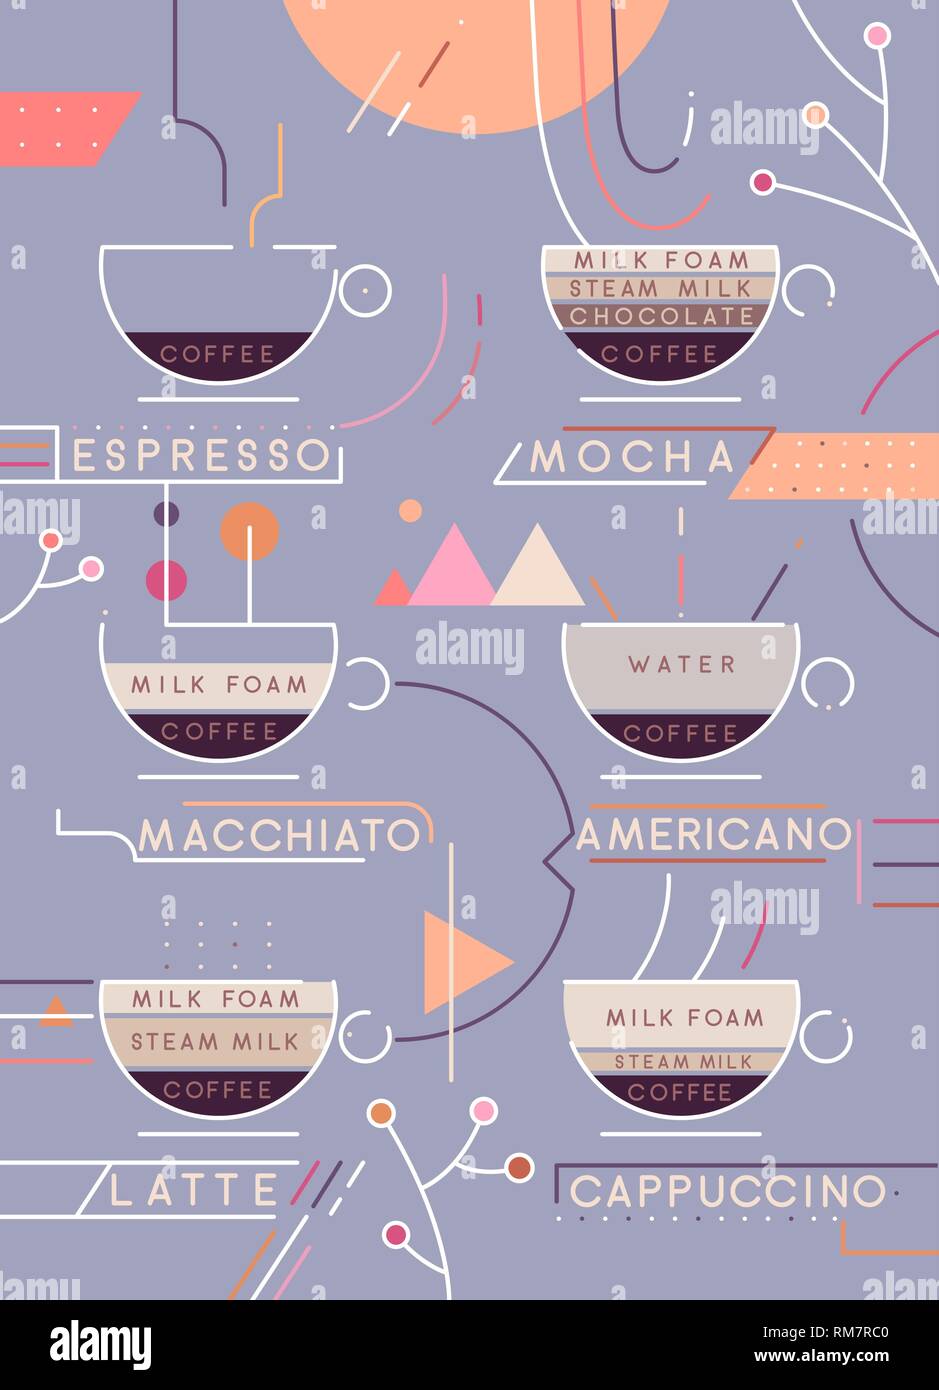 Types de café vector illustration. Préparation du café infographie Illustration de Vecteur